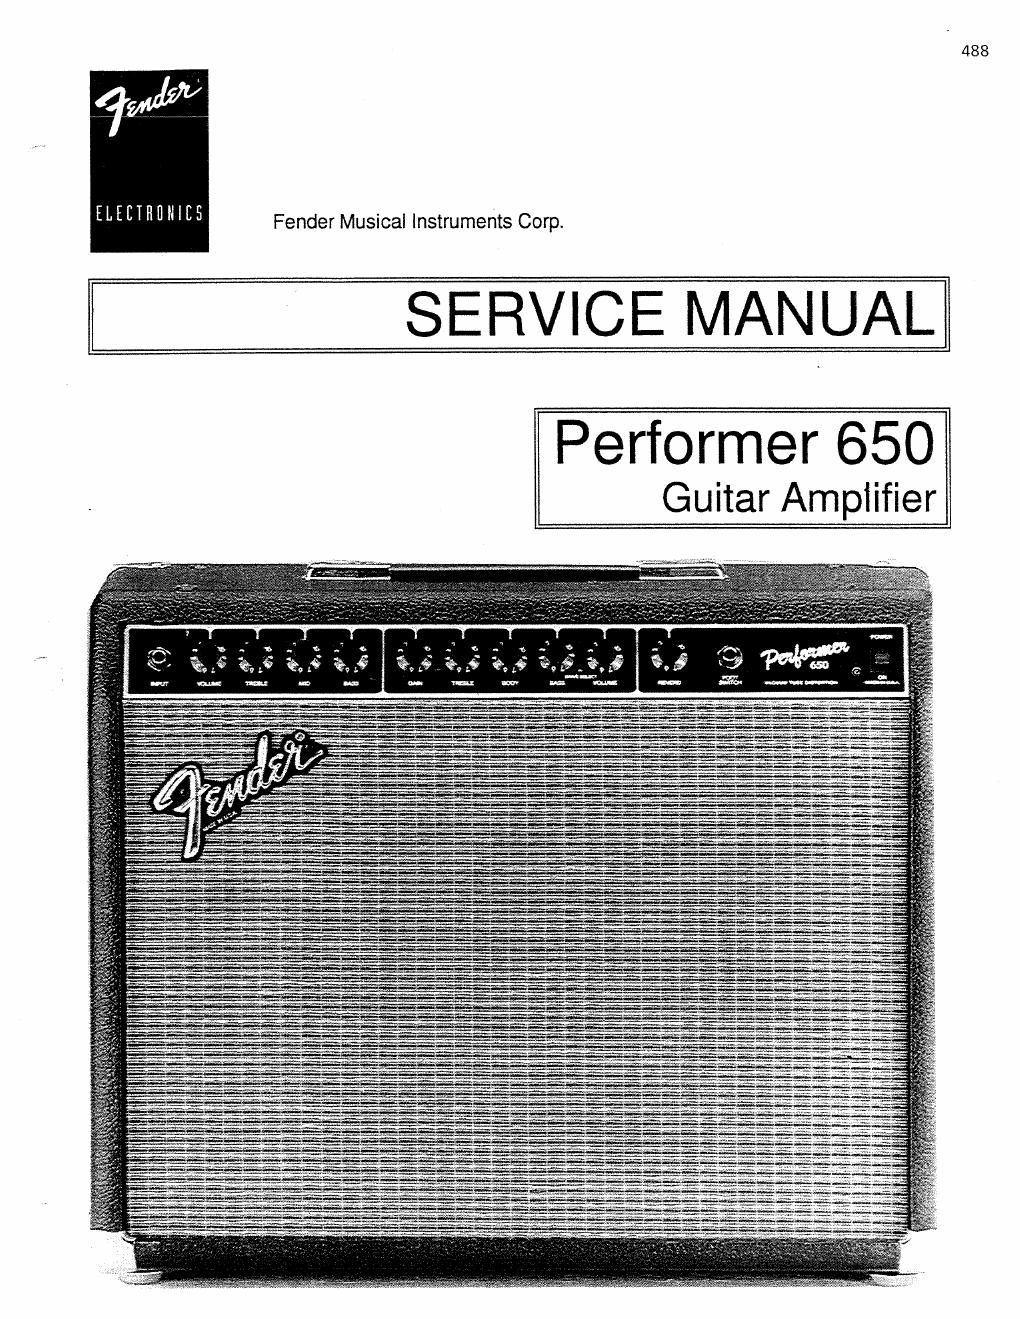 fender performer 650 service manual audio